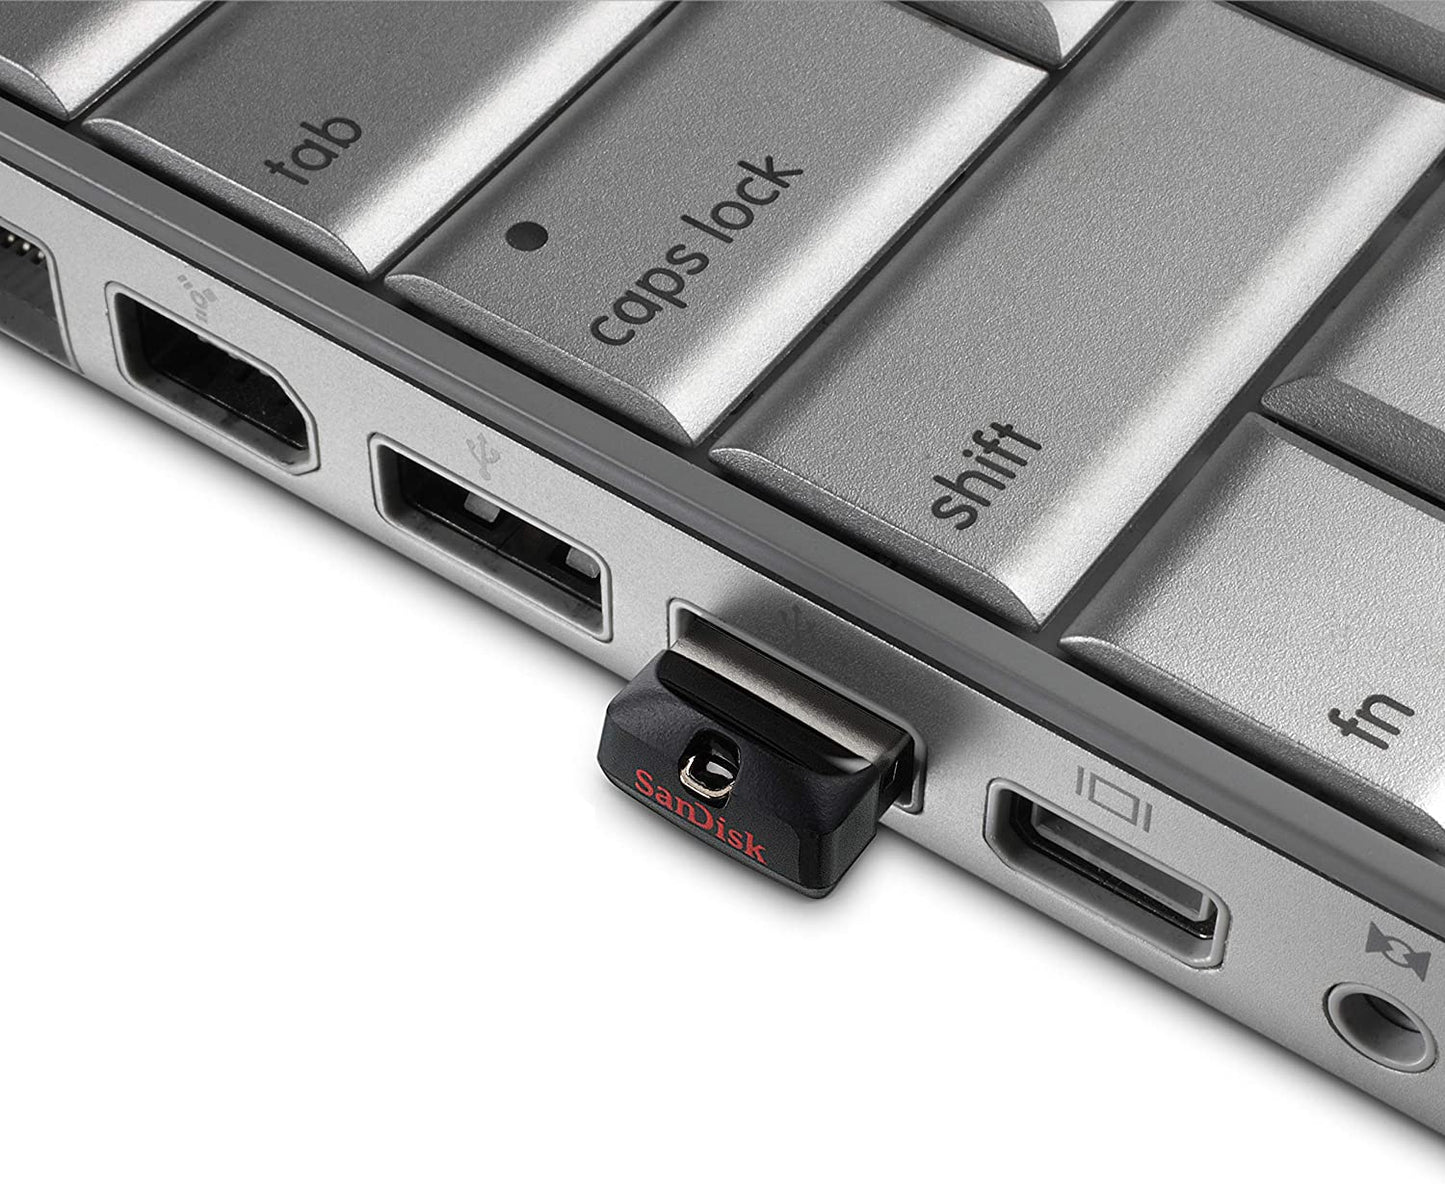 Sandisk 32GB Cruzer Fit USB 2.0 Flash Drive (SDCZ33-032G-G35